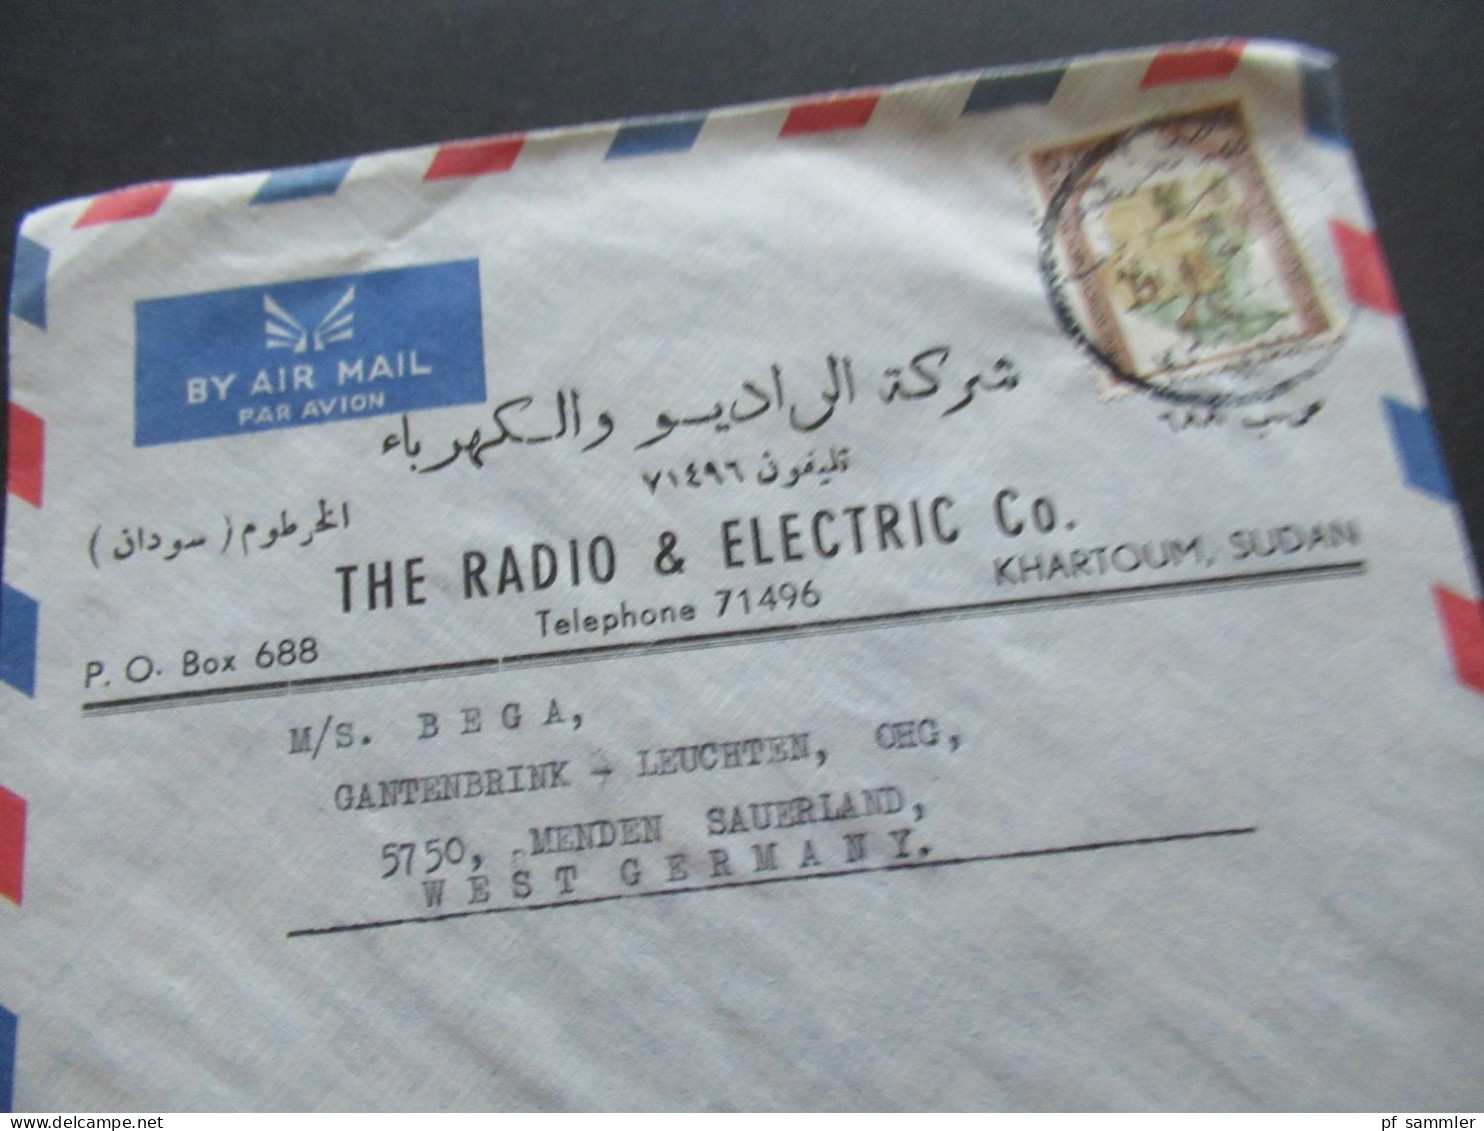 Afrika Sudan 1966 Air Mail Cover Stempel Khartoum Mails Sudan Umschlag The Radio & Electric Co Khartoum Sudan - Sudan (1954-...)